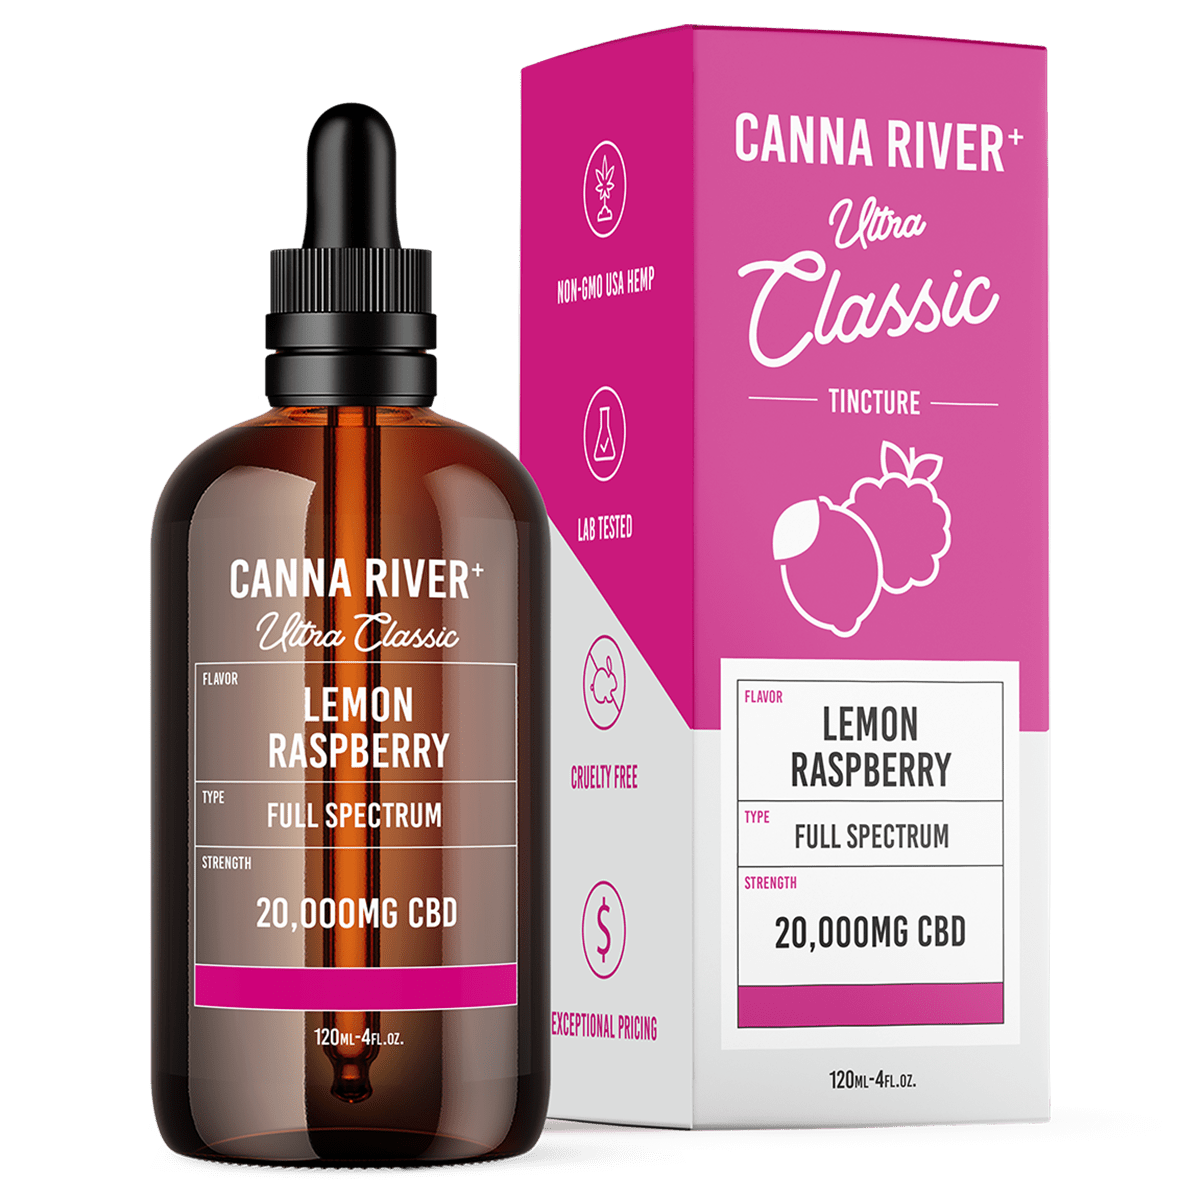 Canna River - Full Spectrum CBD Ultra Classic Tincture - Lemon Raspberry - 120mL